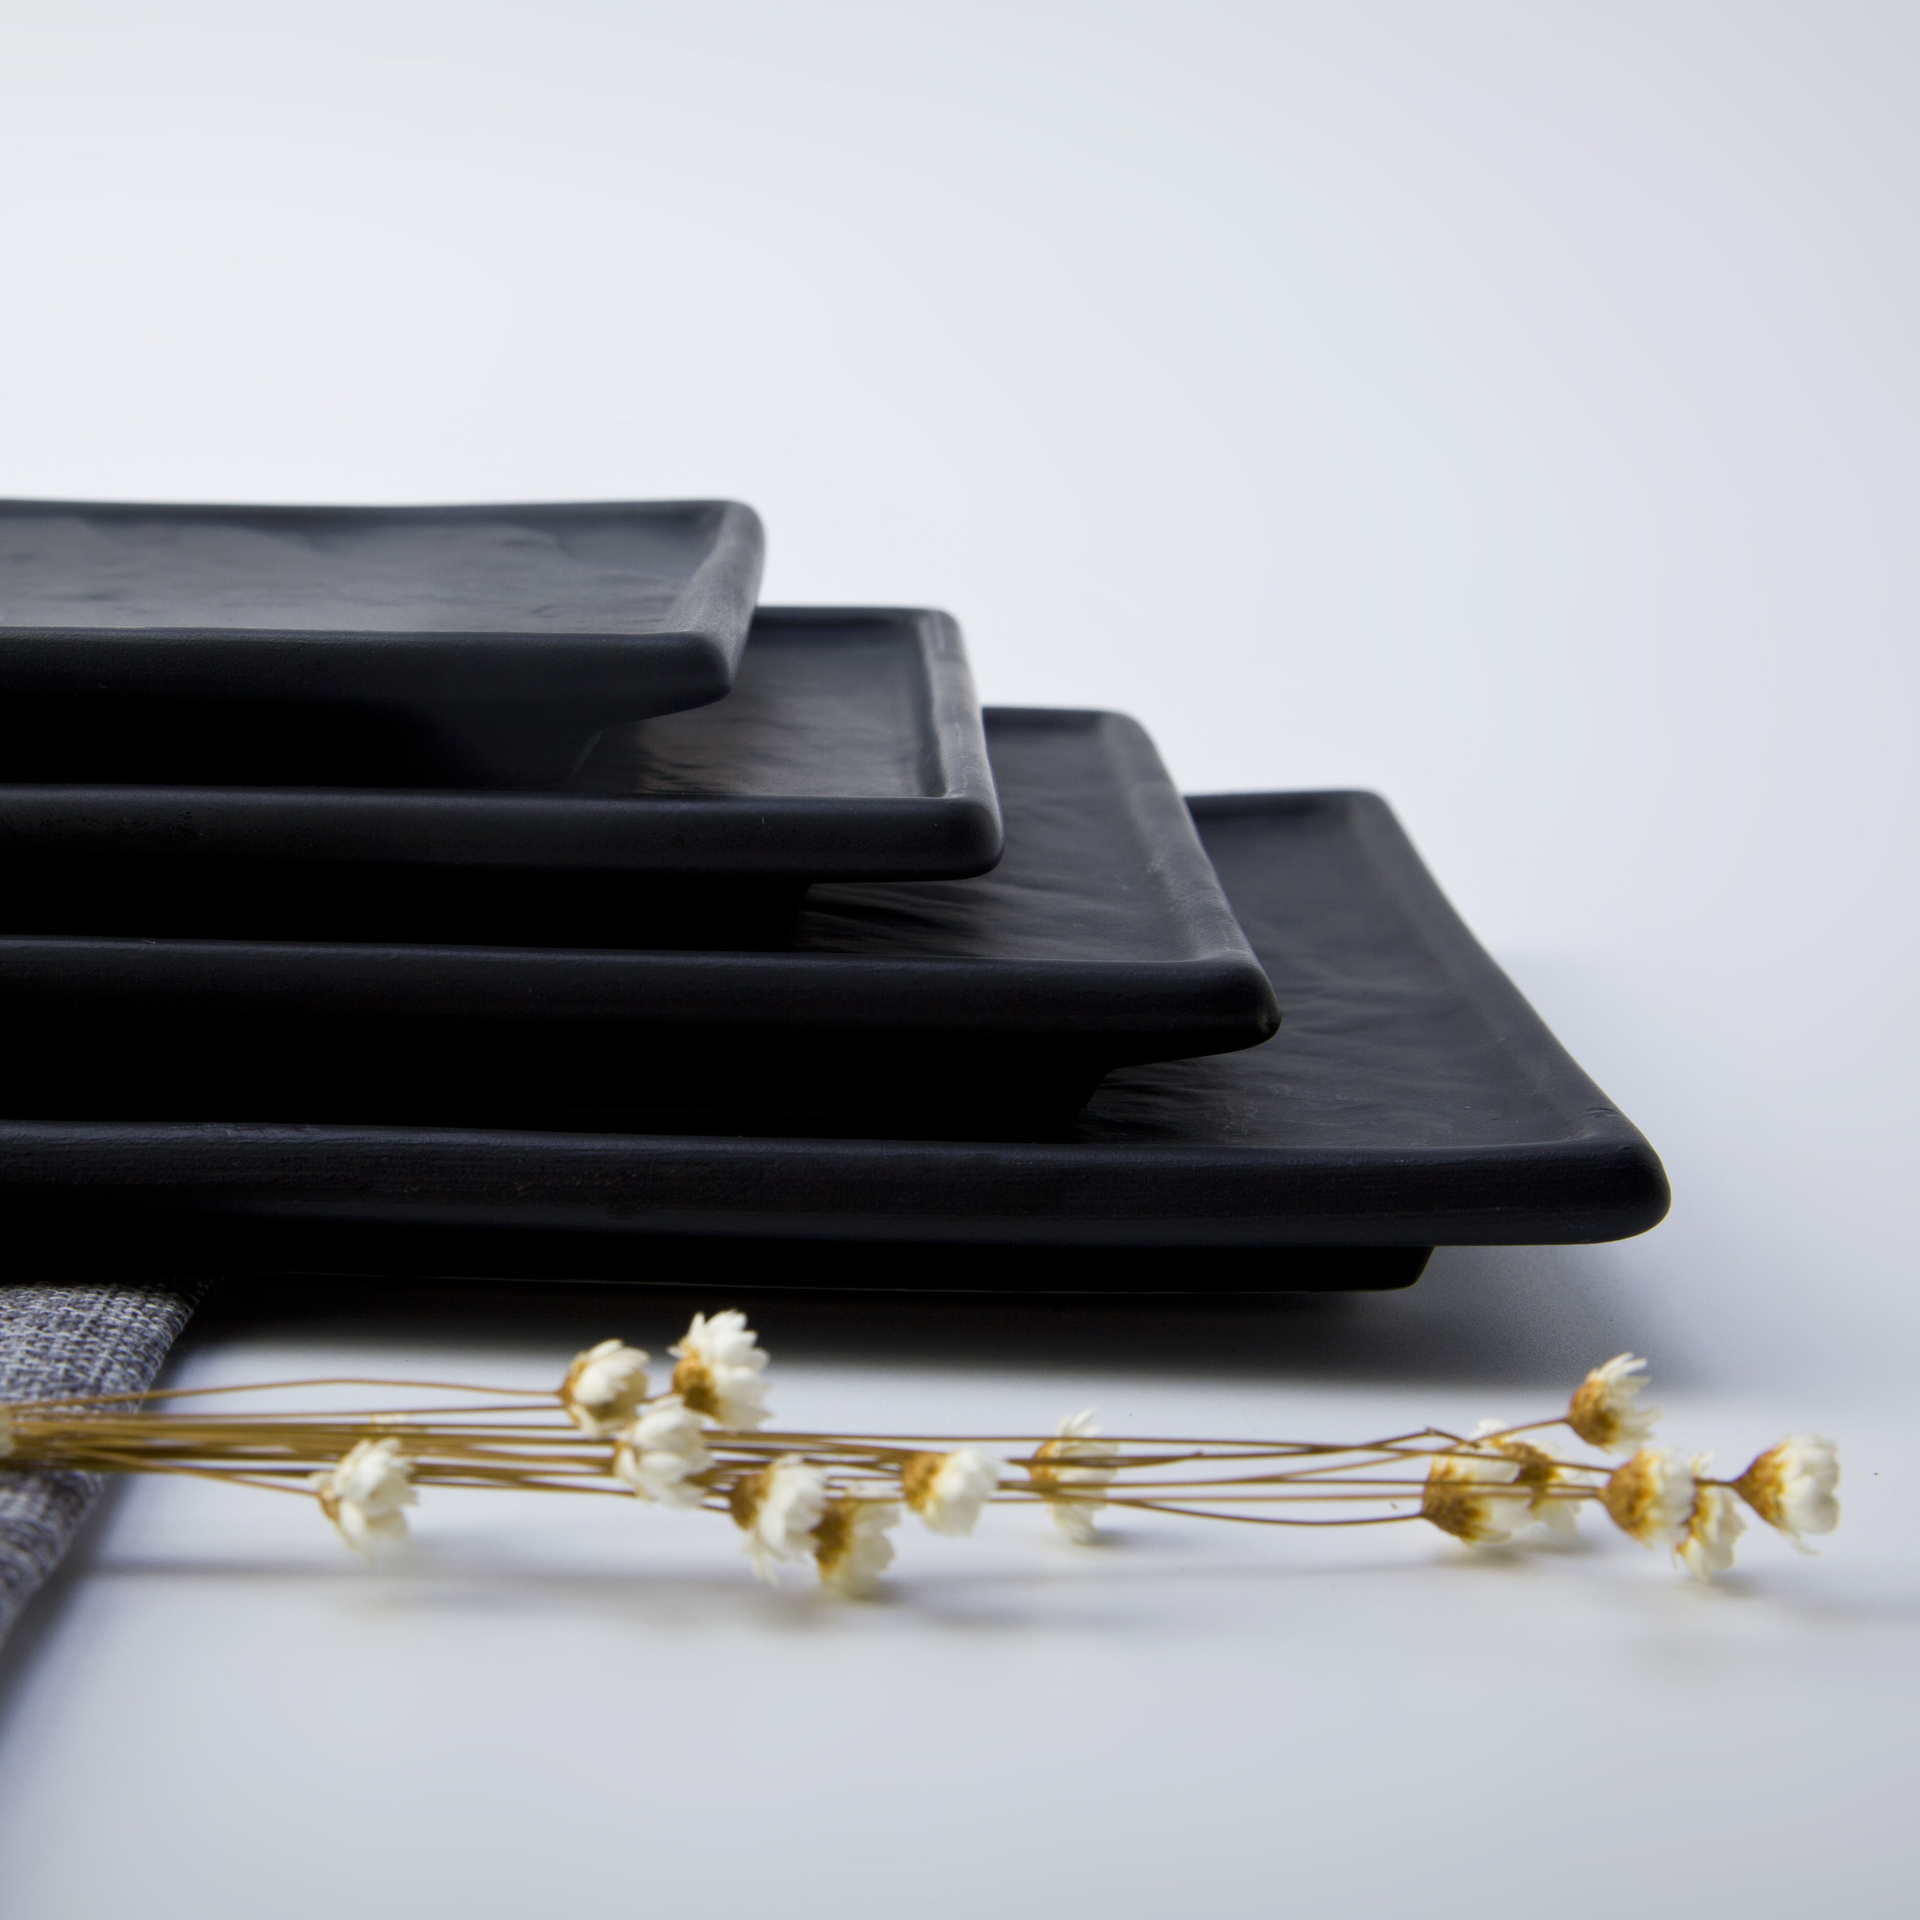 Popular Durable Event Plate Ceramic Dinner Plates Steak, Black Ceramic Rectangular Plate